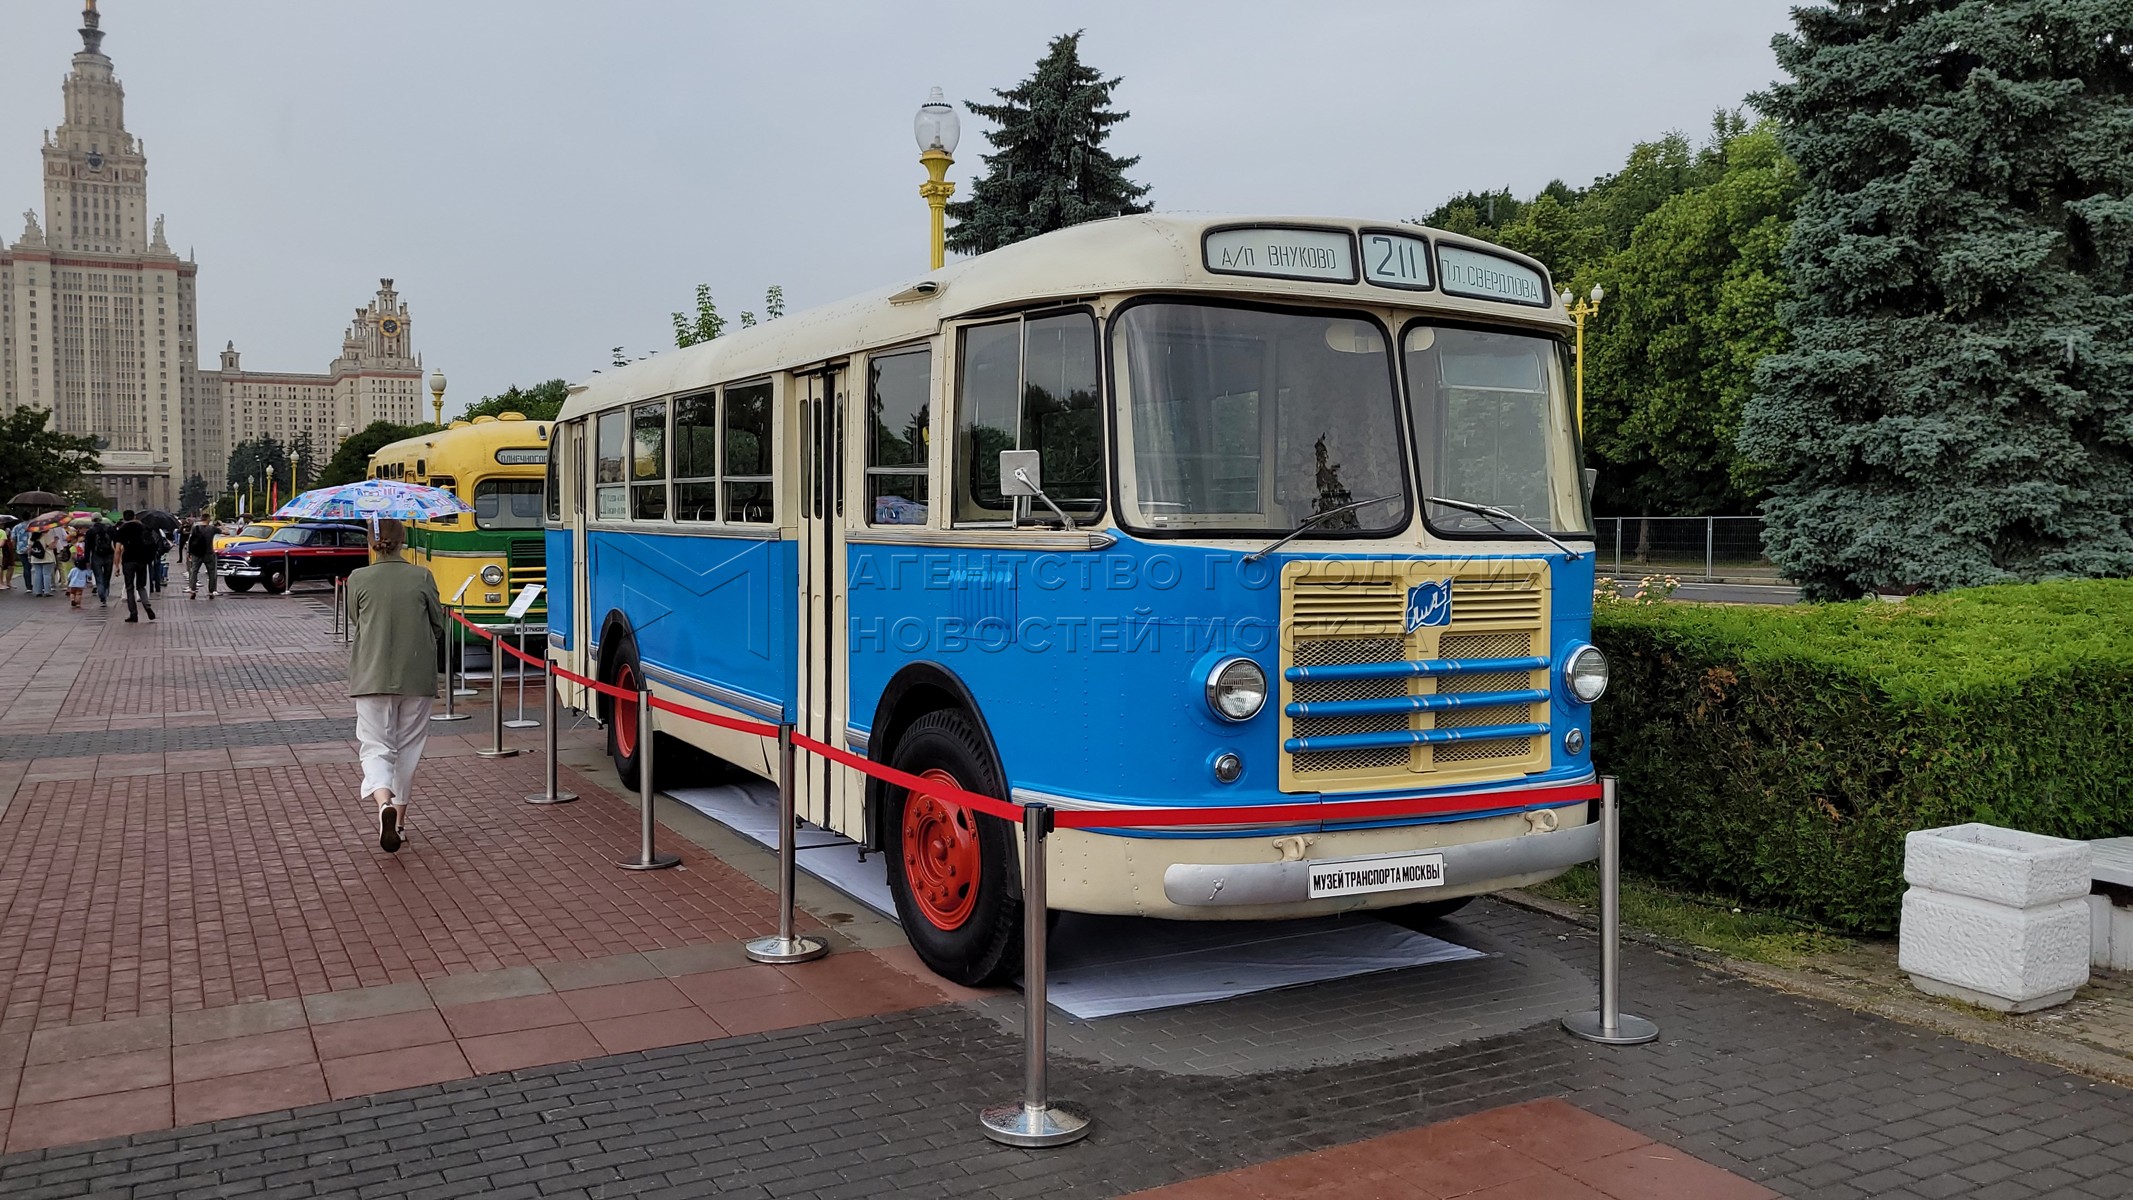 музей московский транспорт